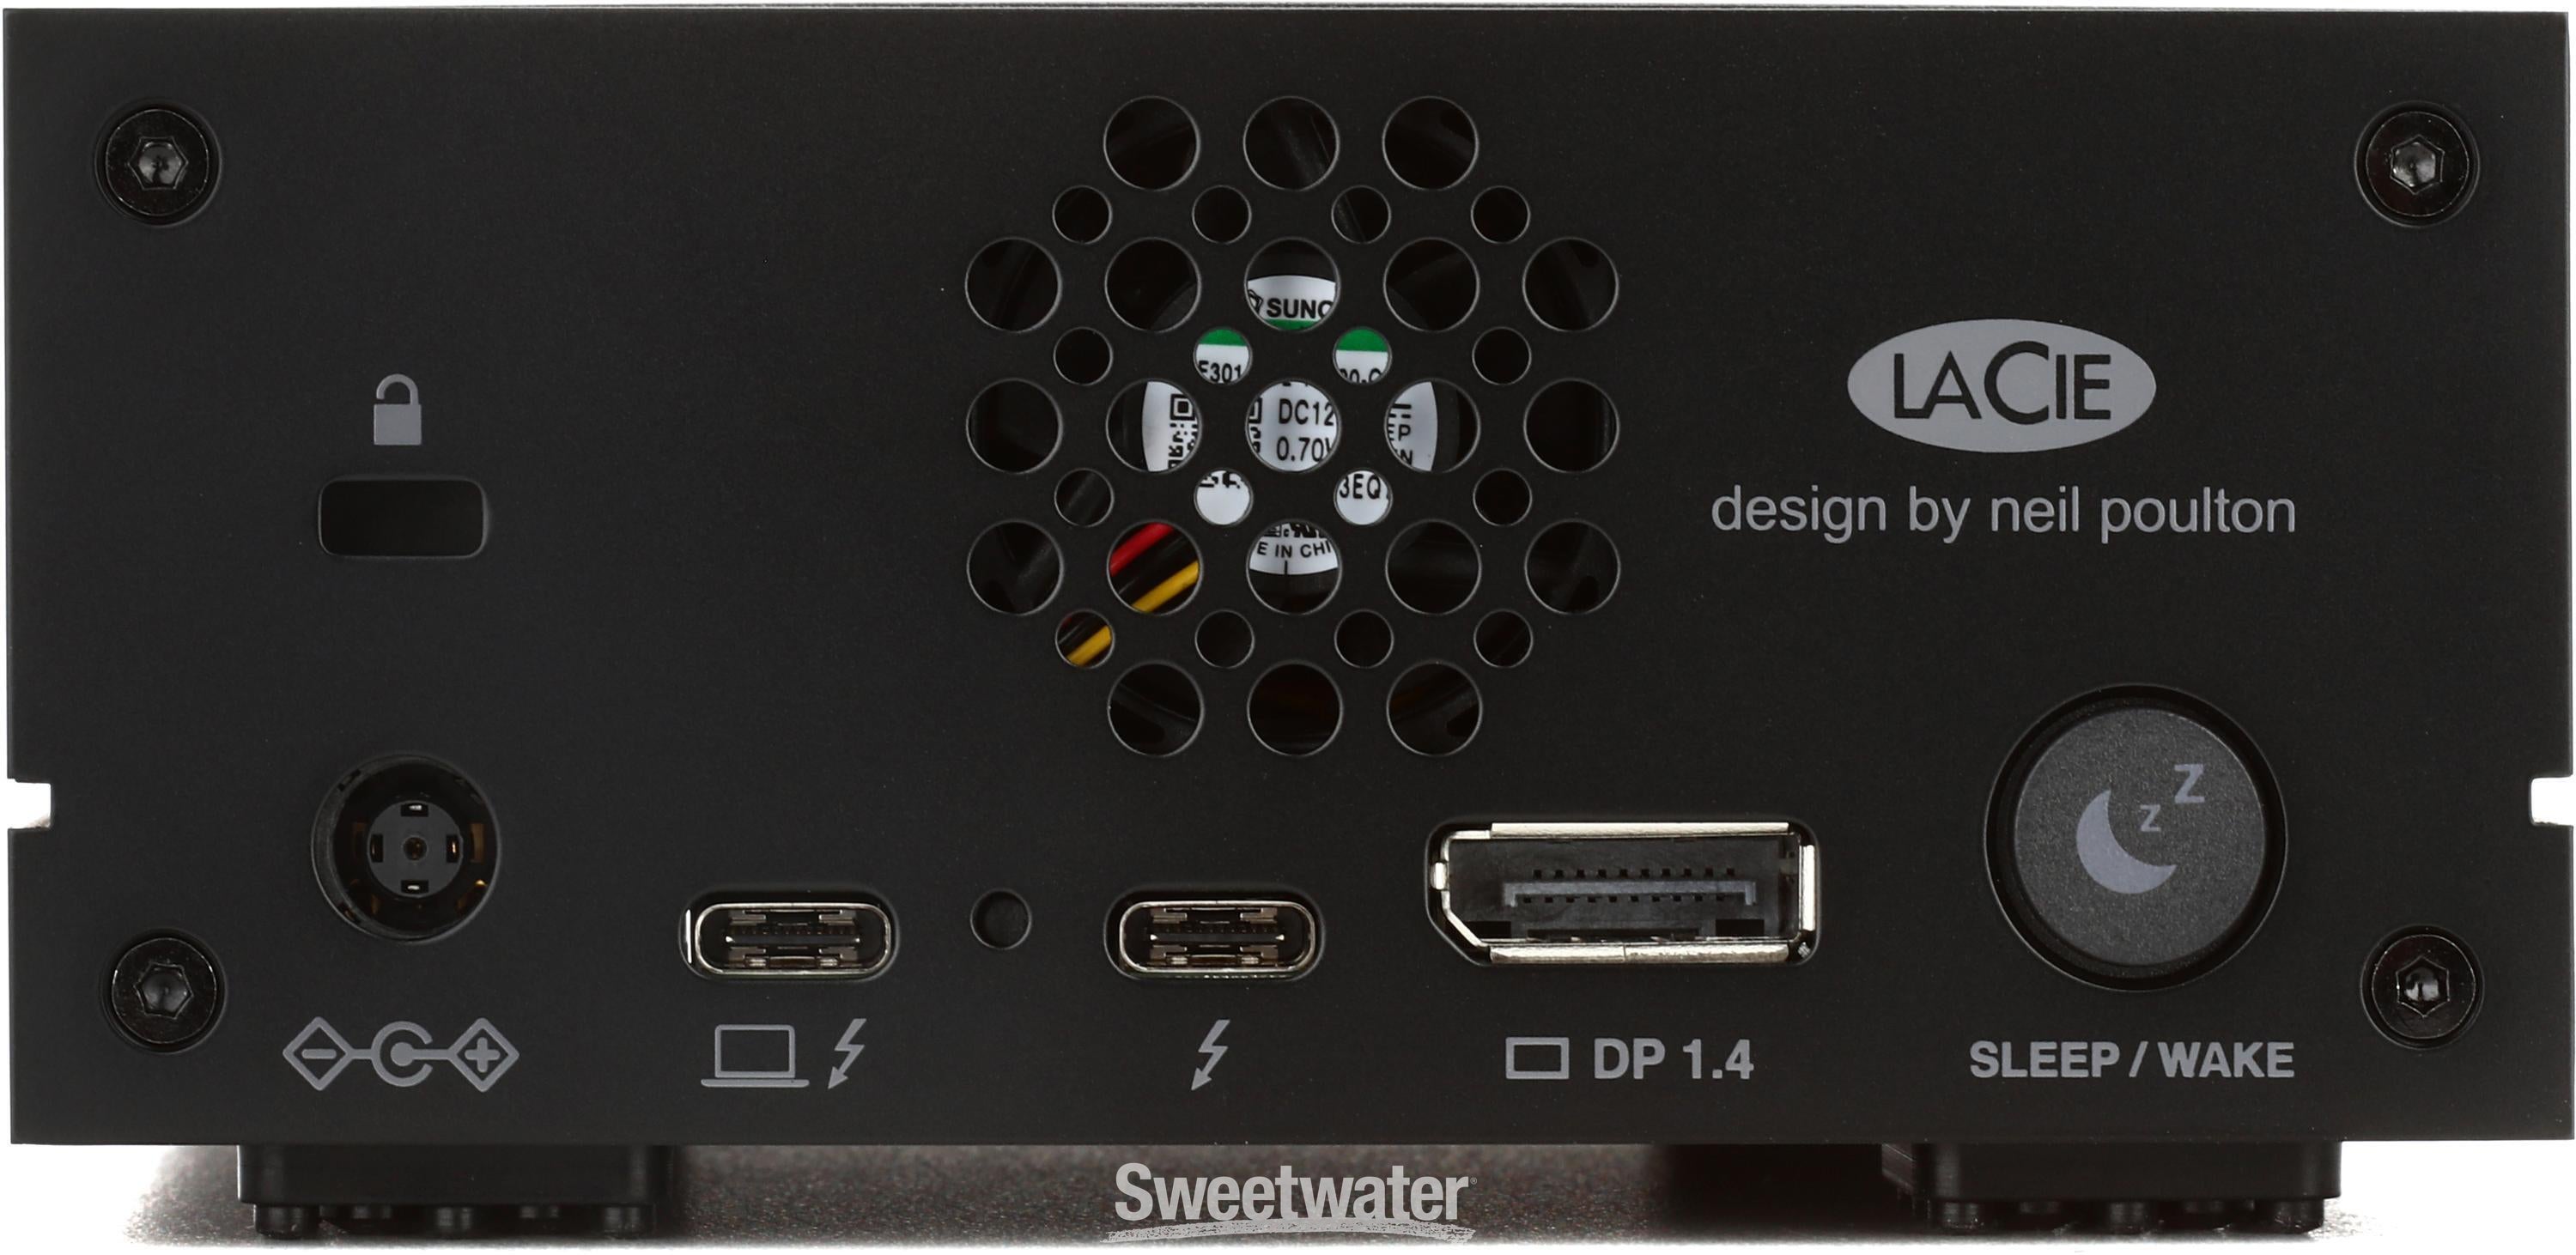 1big Dock Thunderbolt 3 8TB HDD and Desktop Hub - Sweetwater